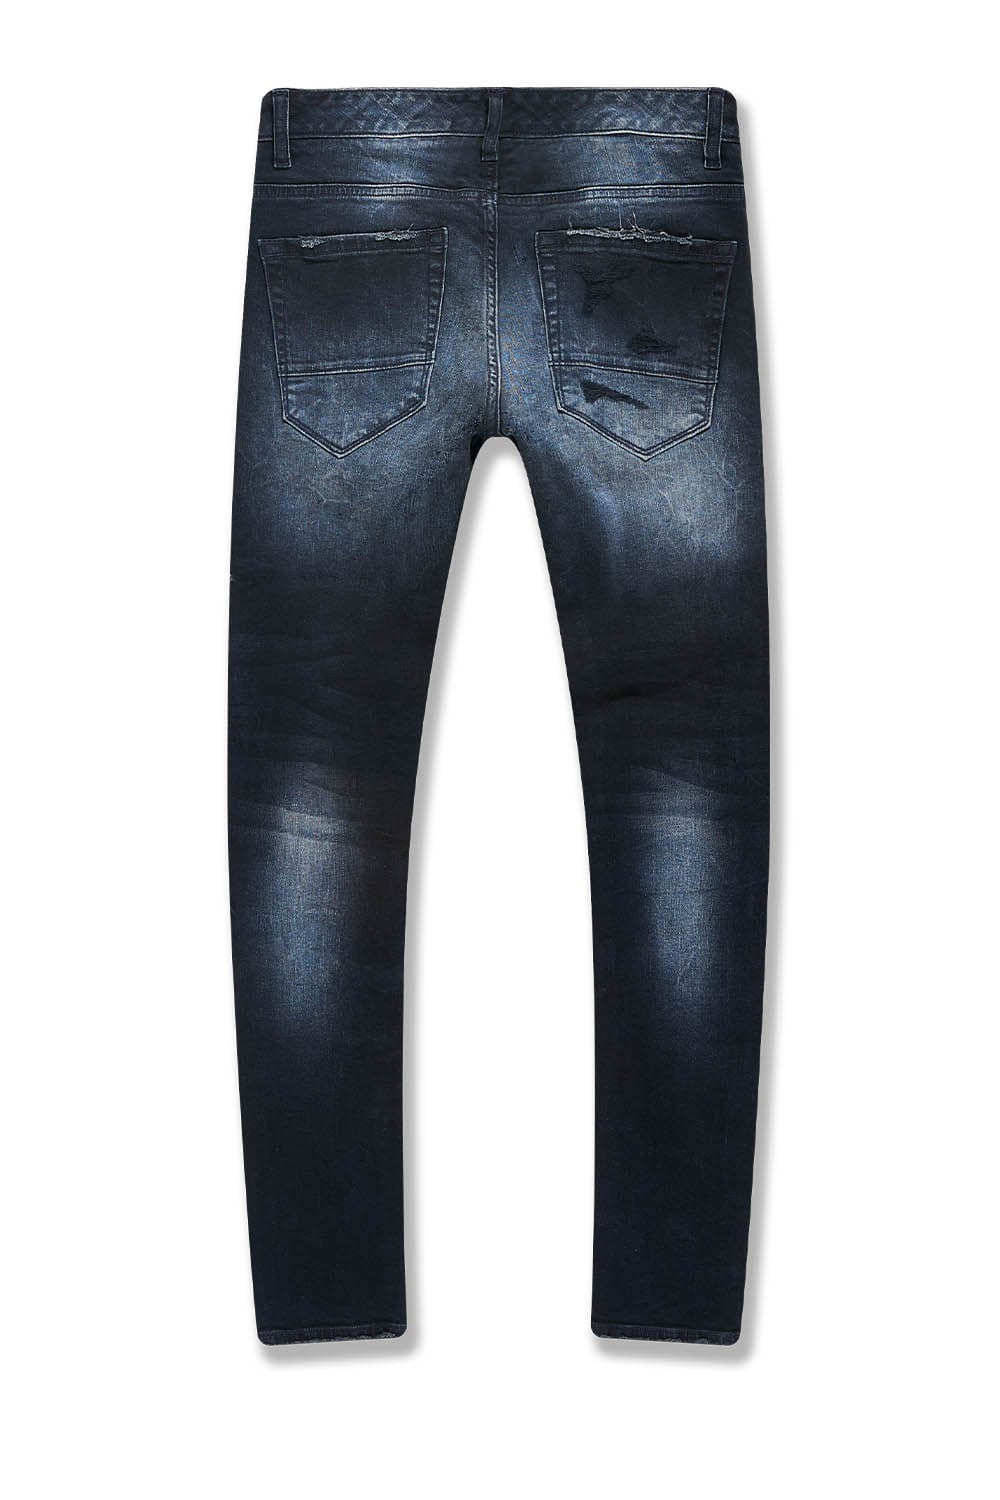 Jordan Craig Midnight Blue Jeans